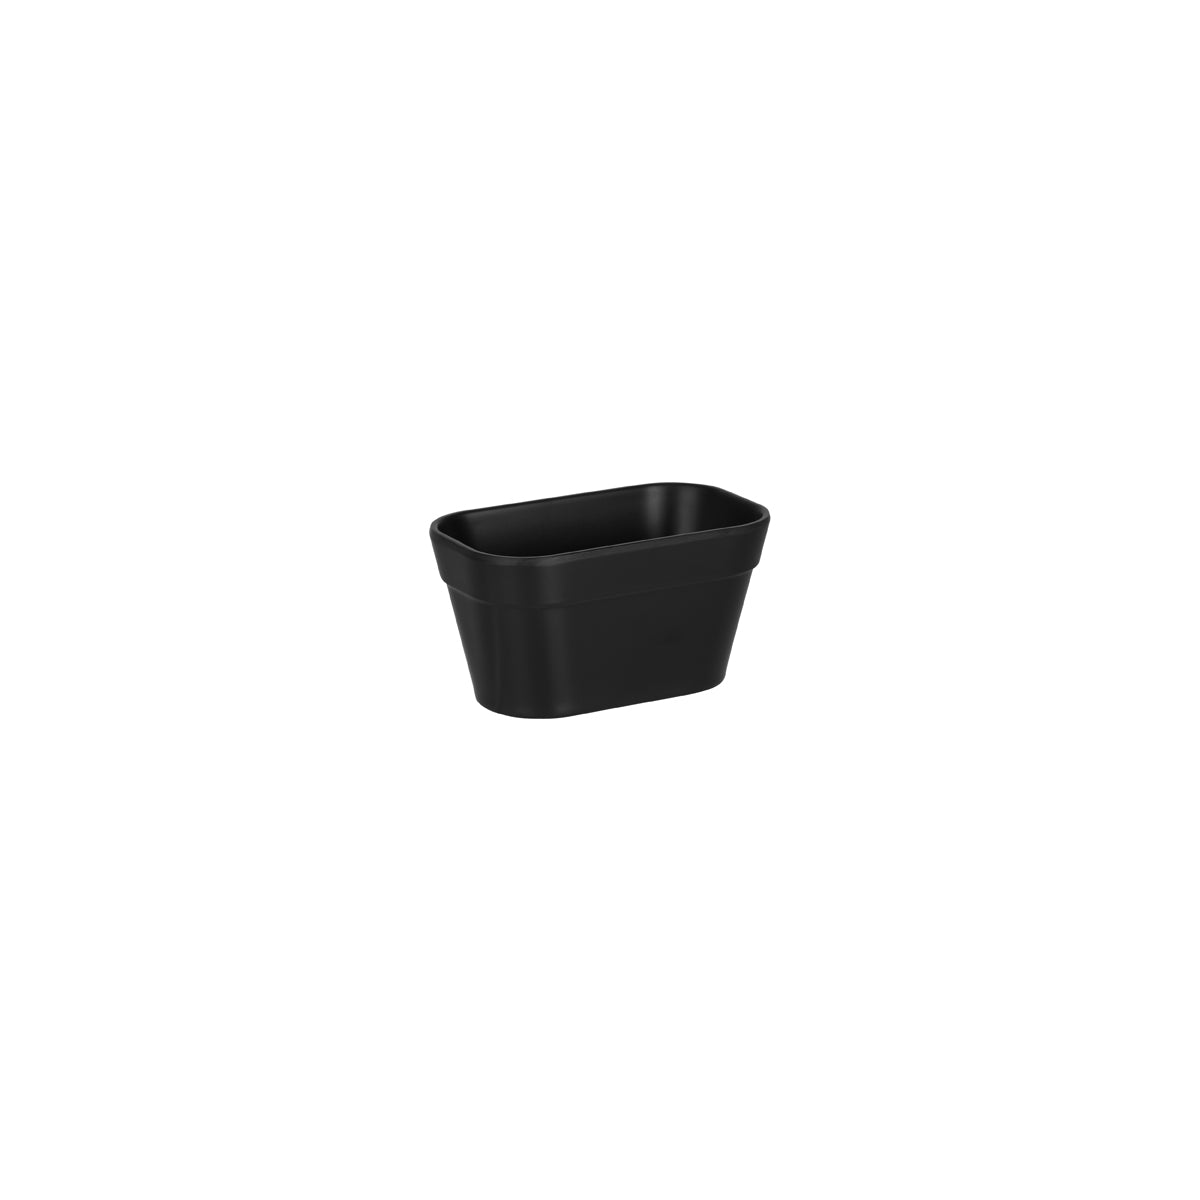 46384 Zicco Zicco Bento Box Black Insert Bowl Solid Small Tomkin Australia Hospitality Supplies